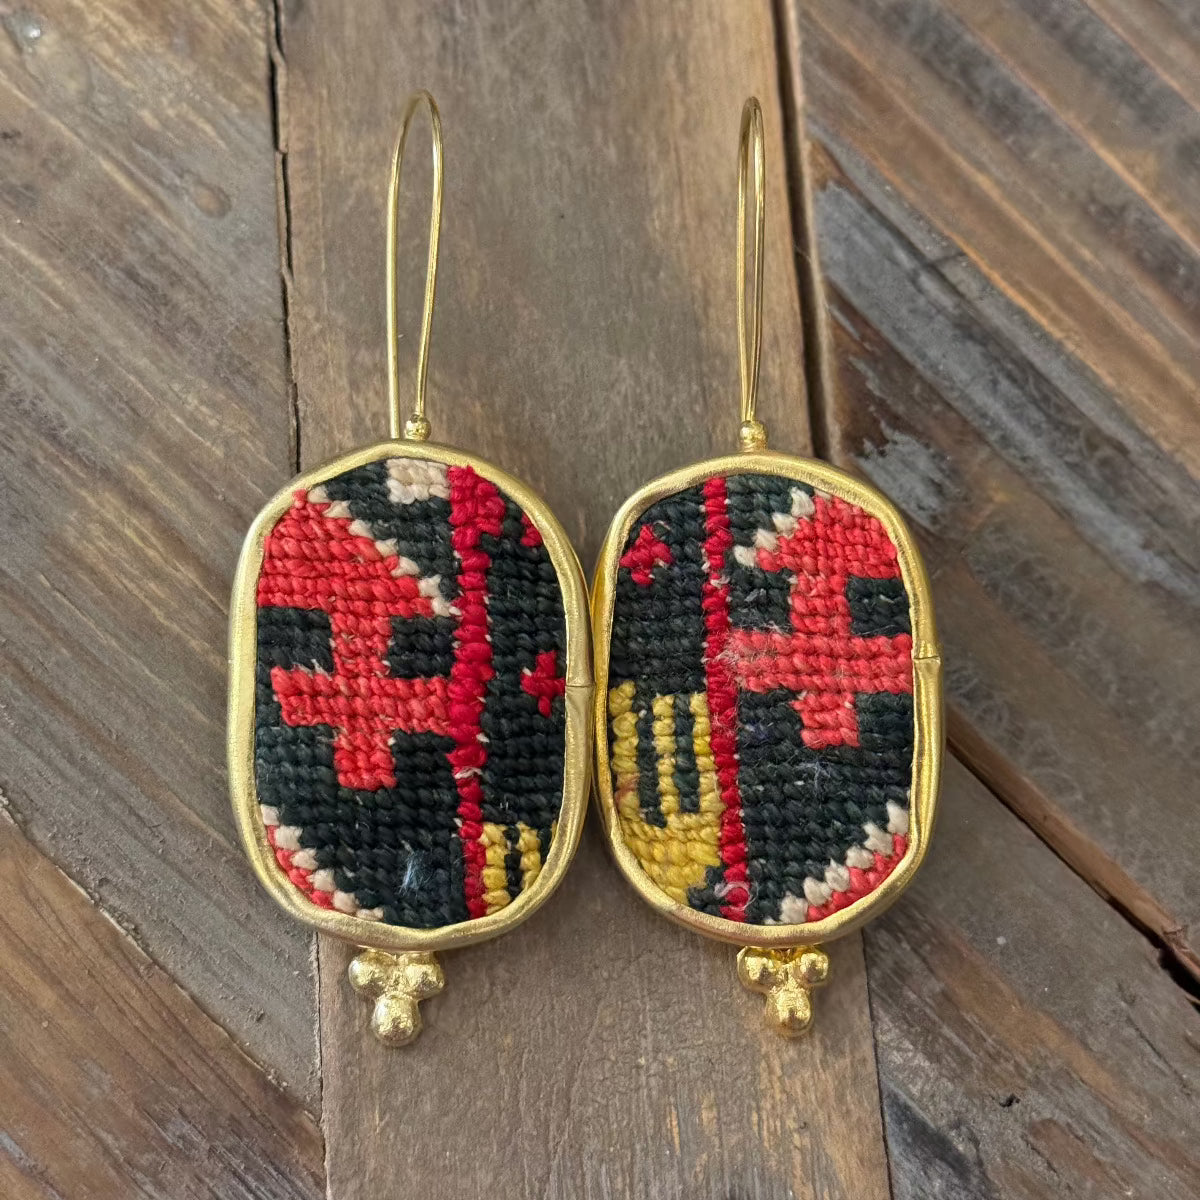 Hand Crafted Ottoman Vintage Textile Earrings - Oval New Jewelry Eyup Gunduz C 